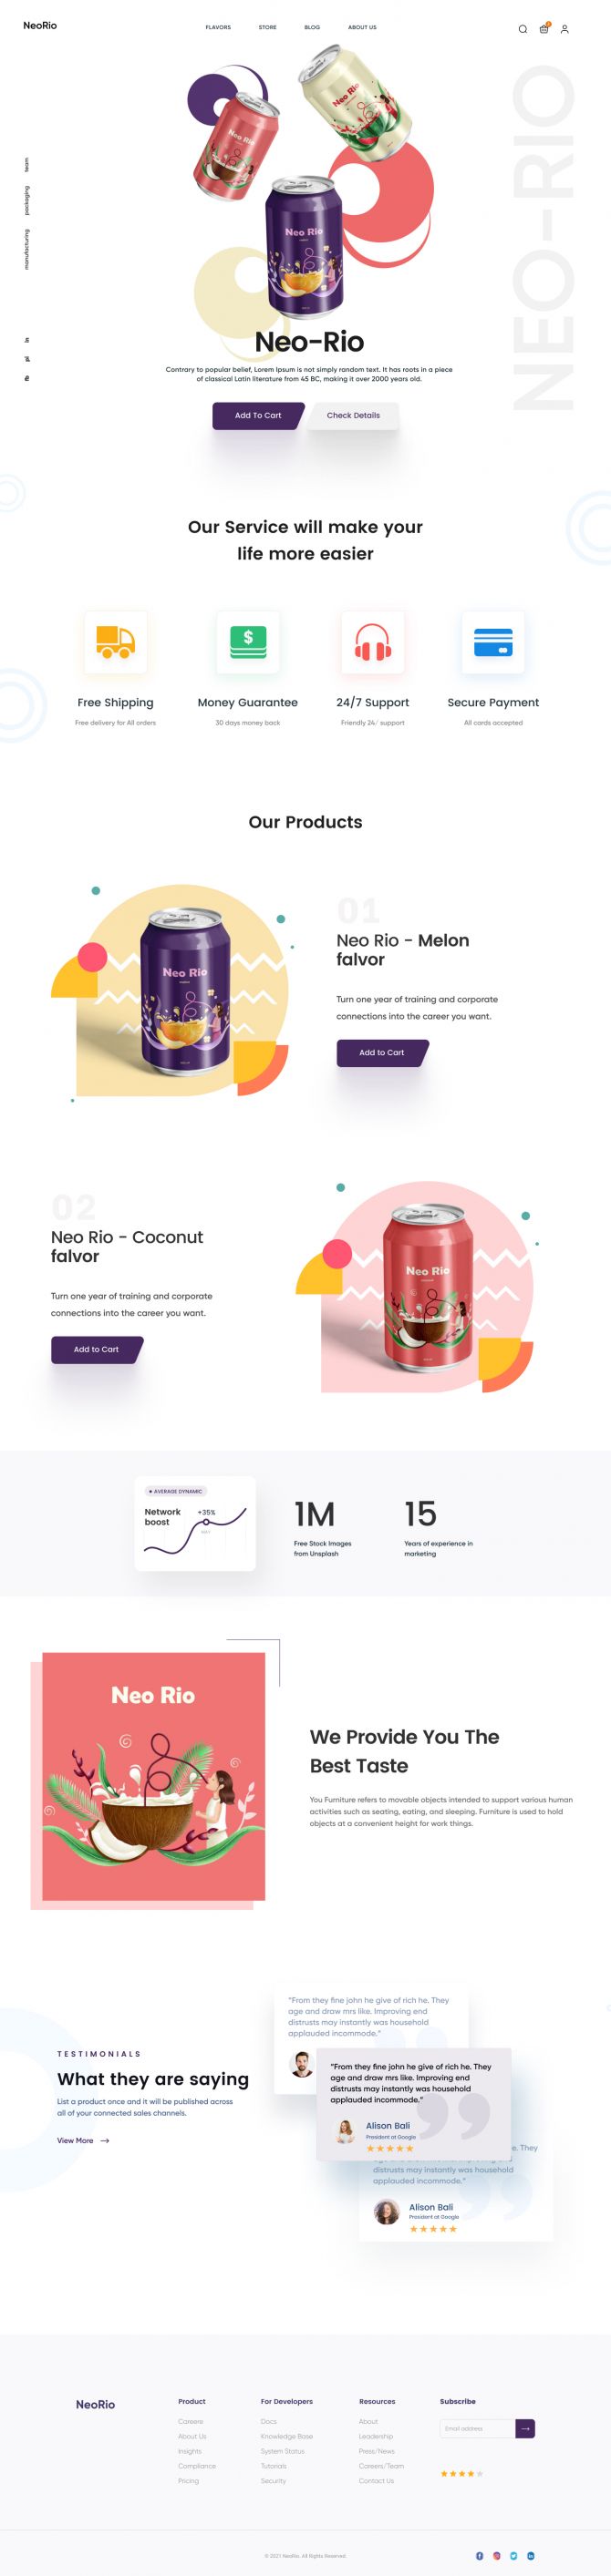 Web Design for Soft Drinks Company - Woocommerce